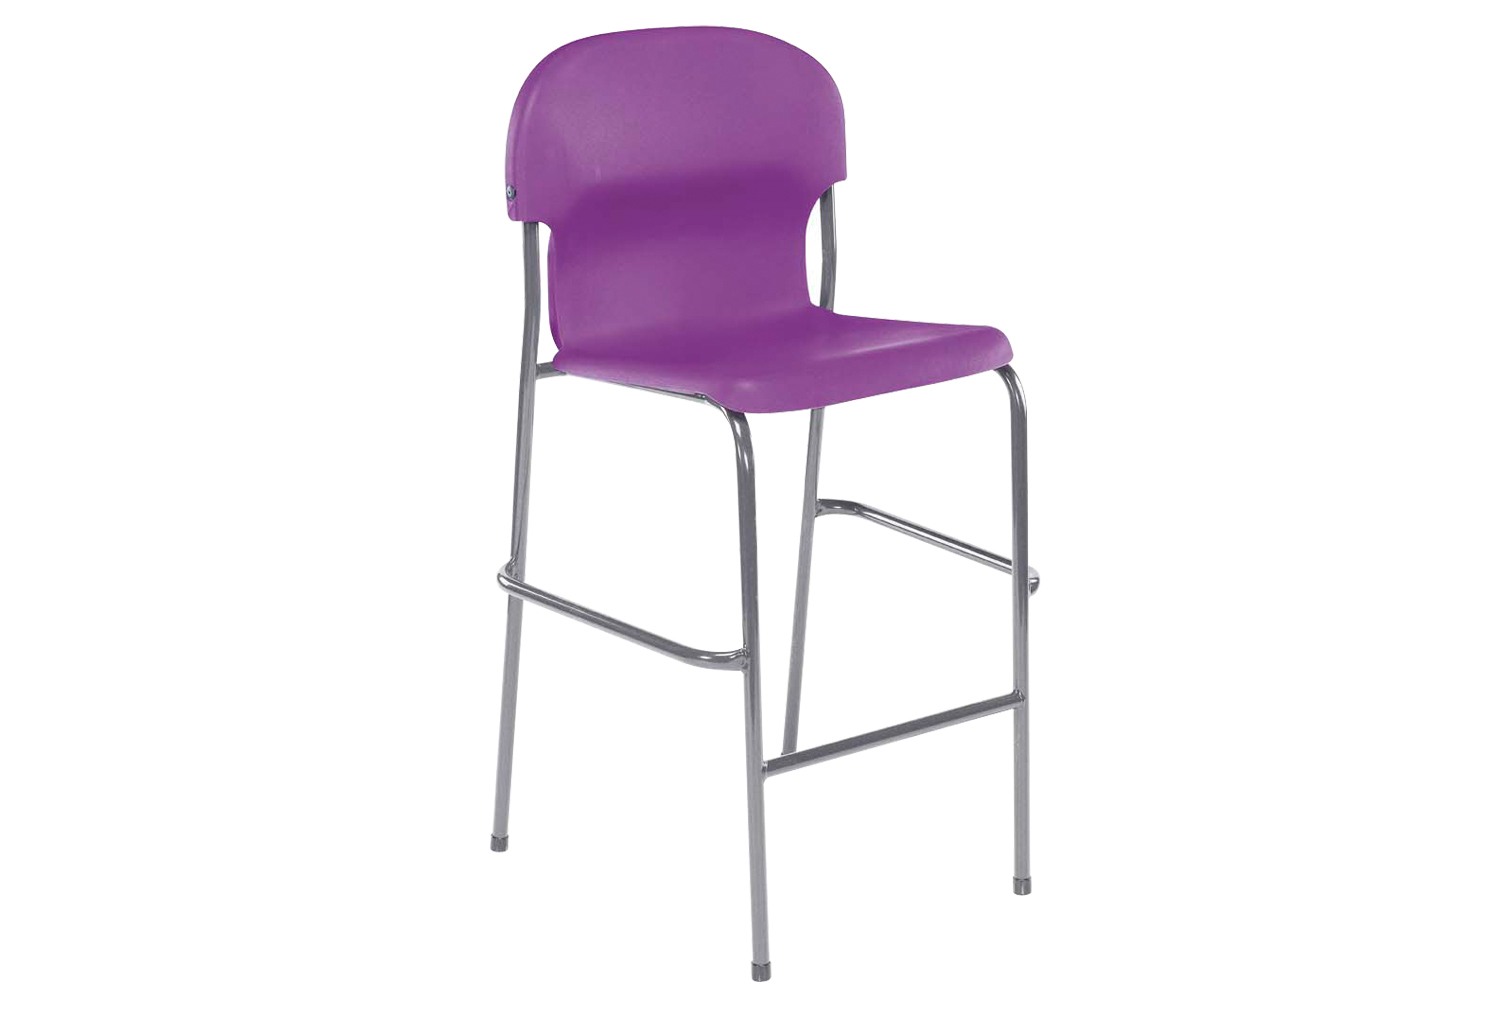 Metalliform Chair 2000 High Classroom Chair